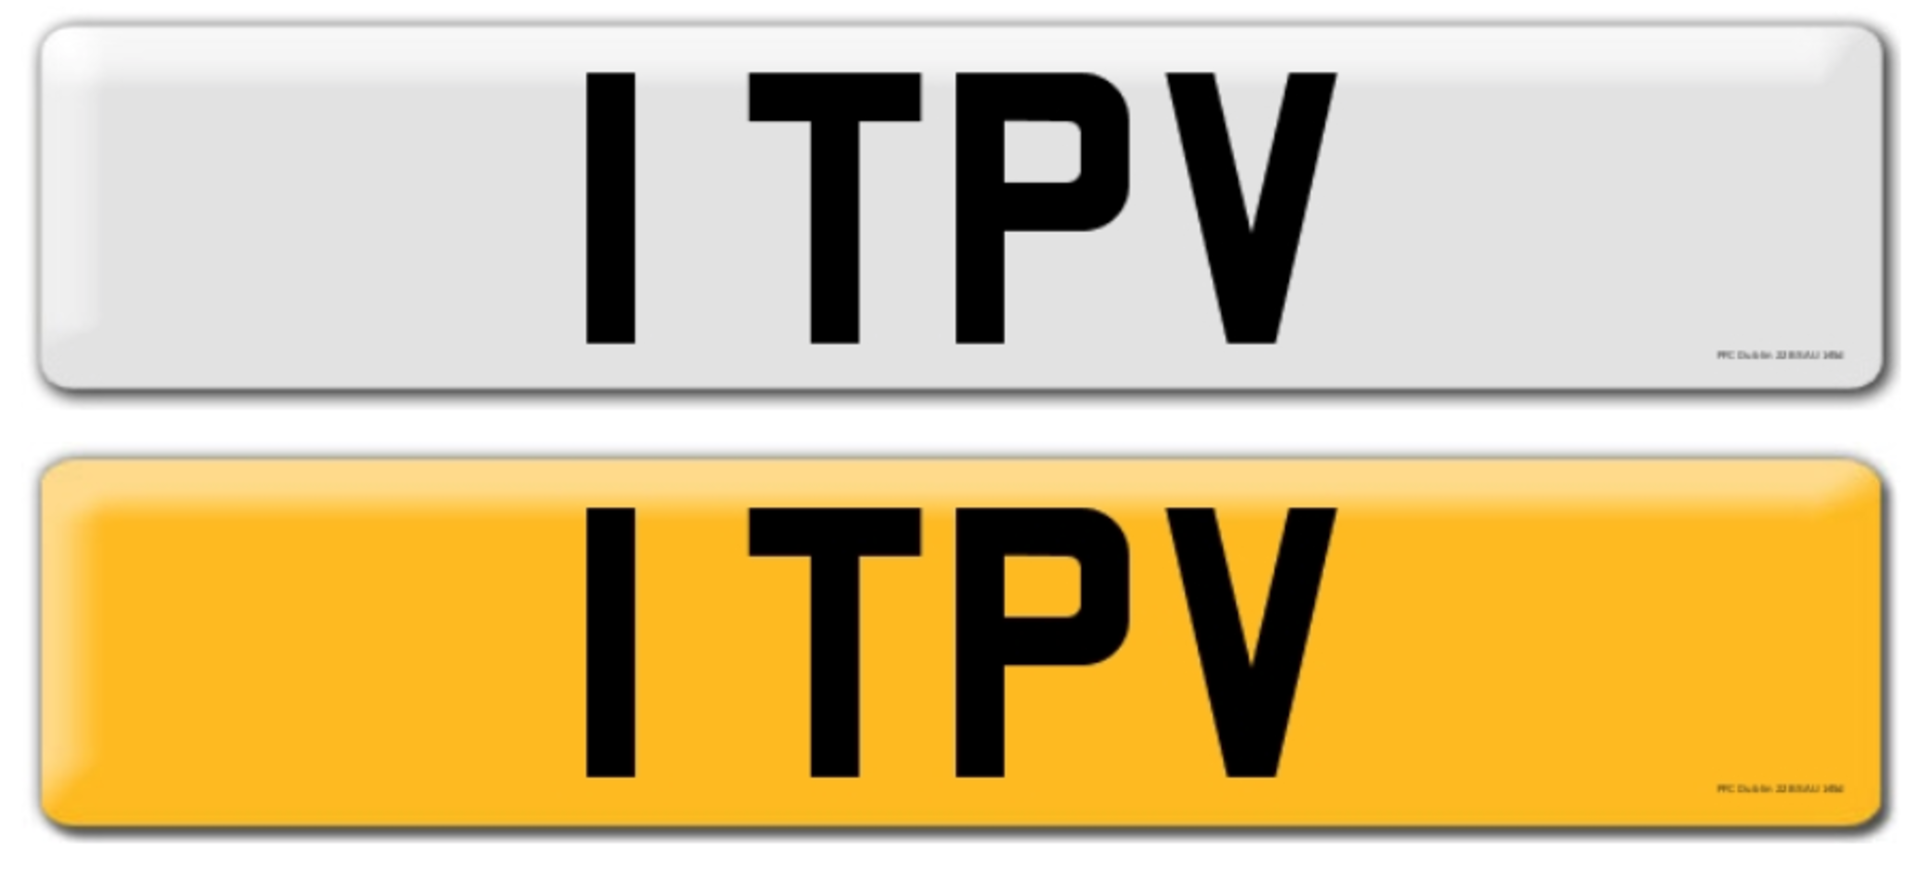 1 TPV - Image 2 of 2